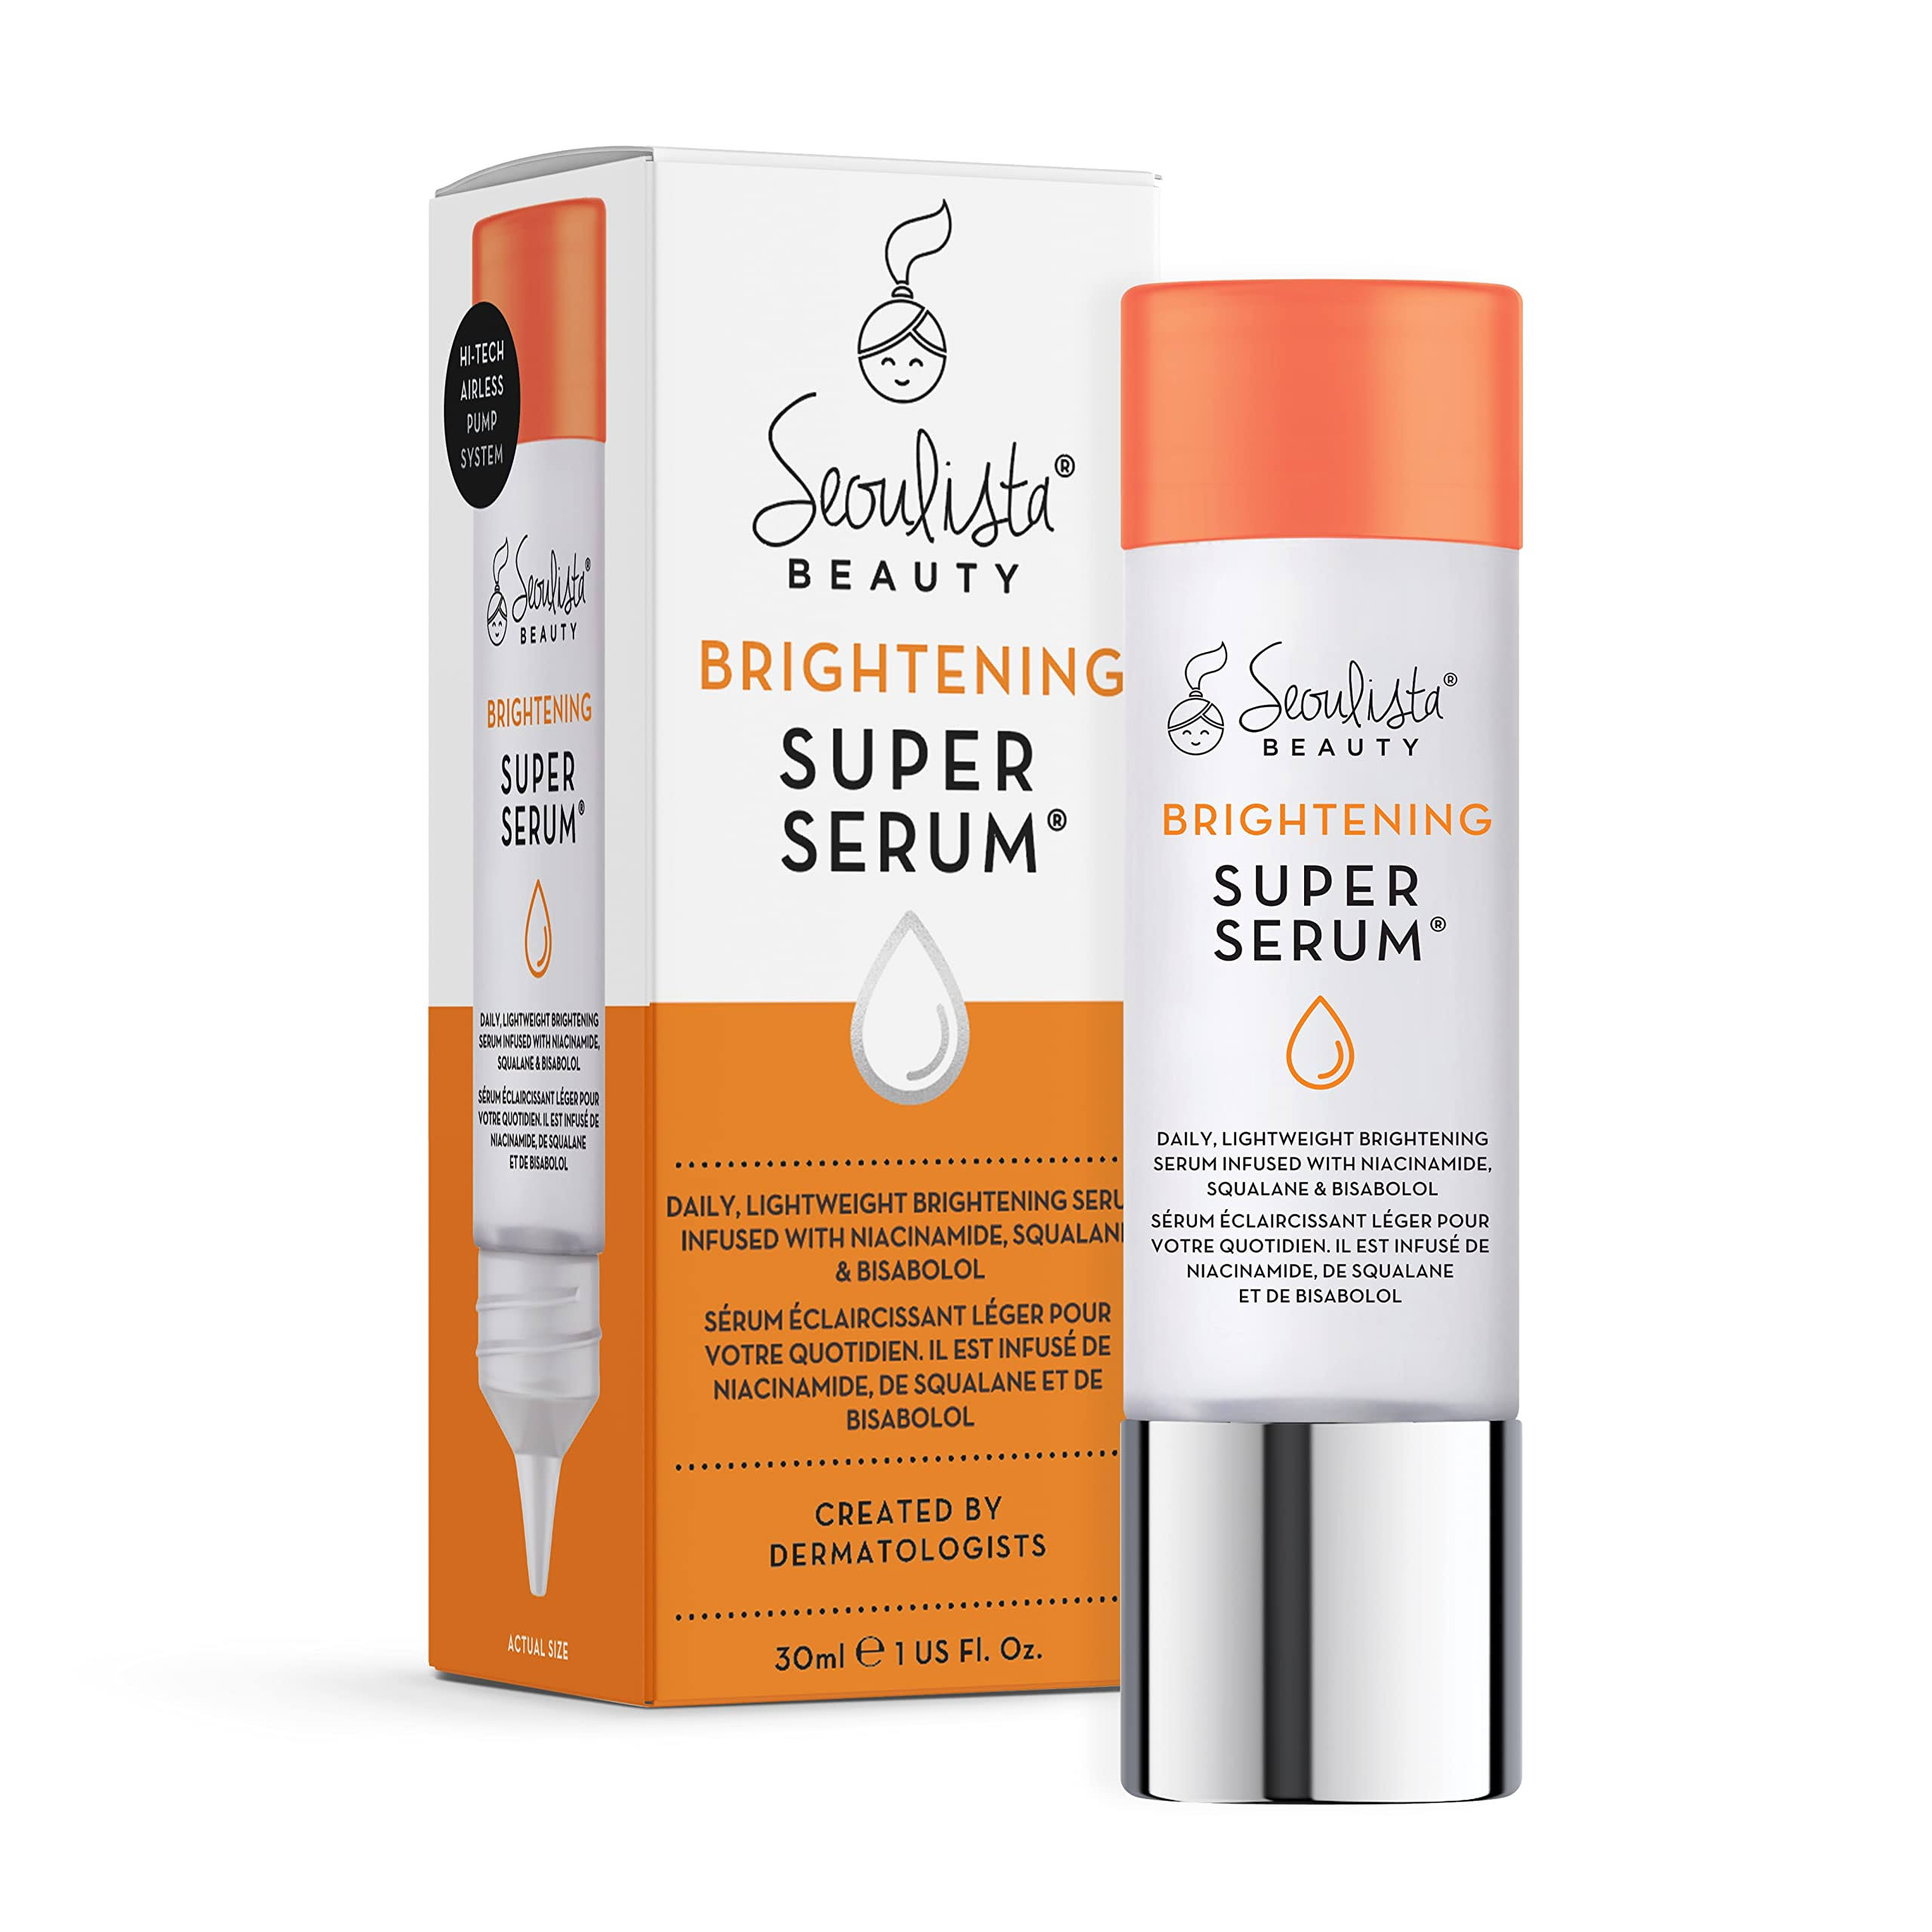 Seoulista Beauty Brightening Super Serum 30ml (1.0 fl oz)